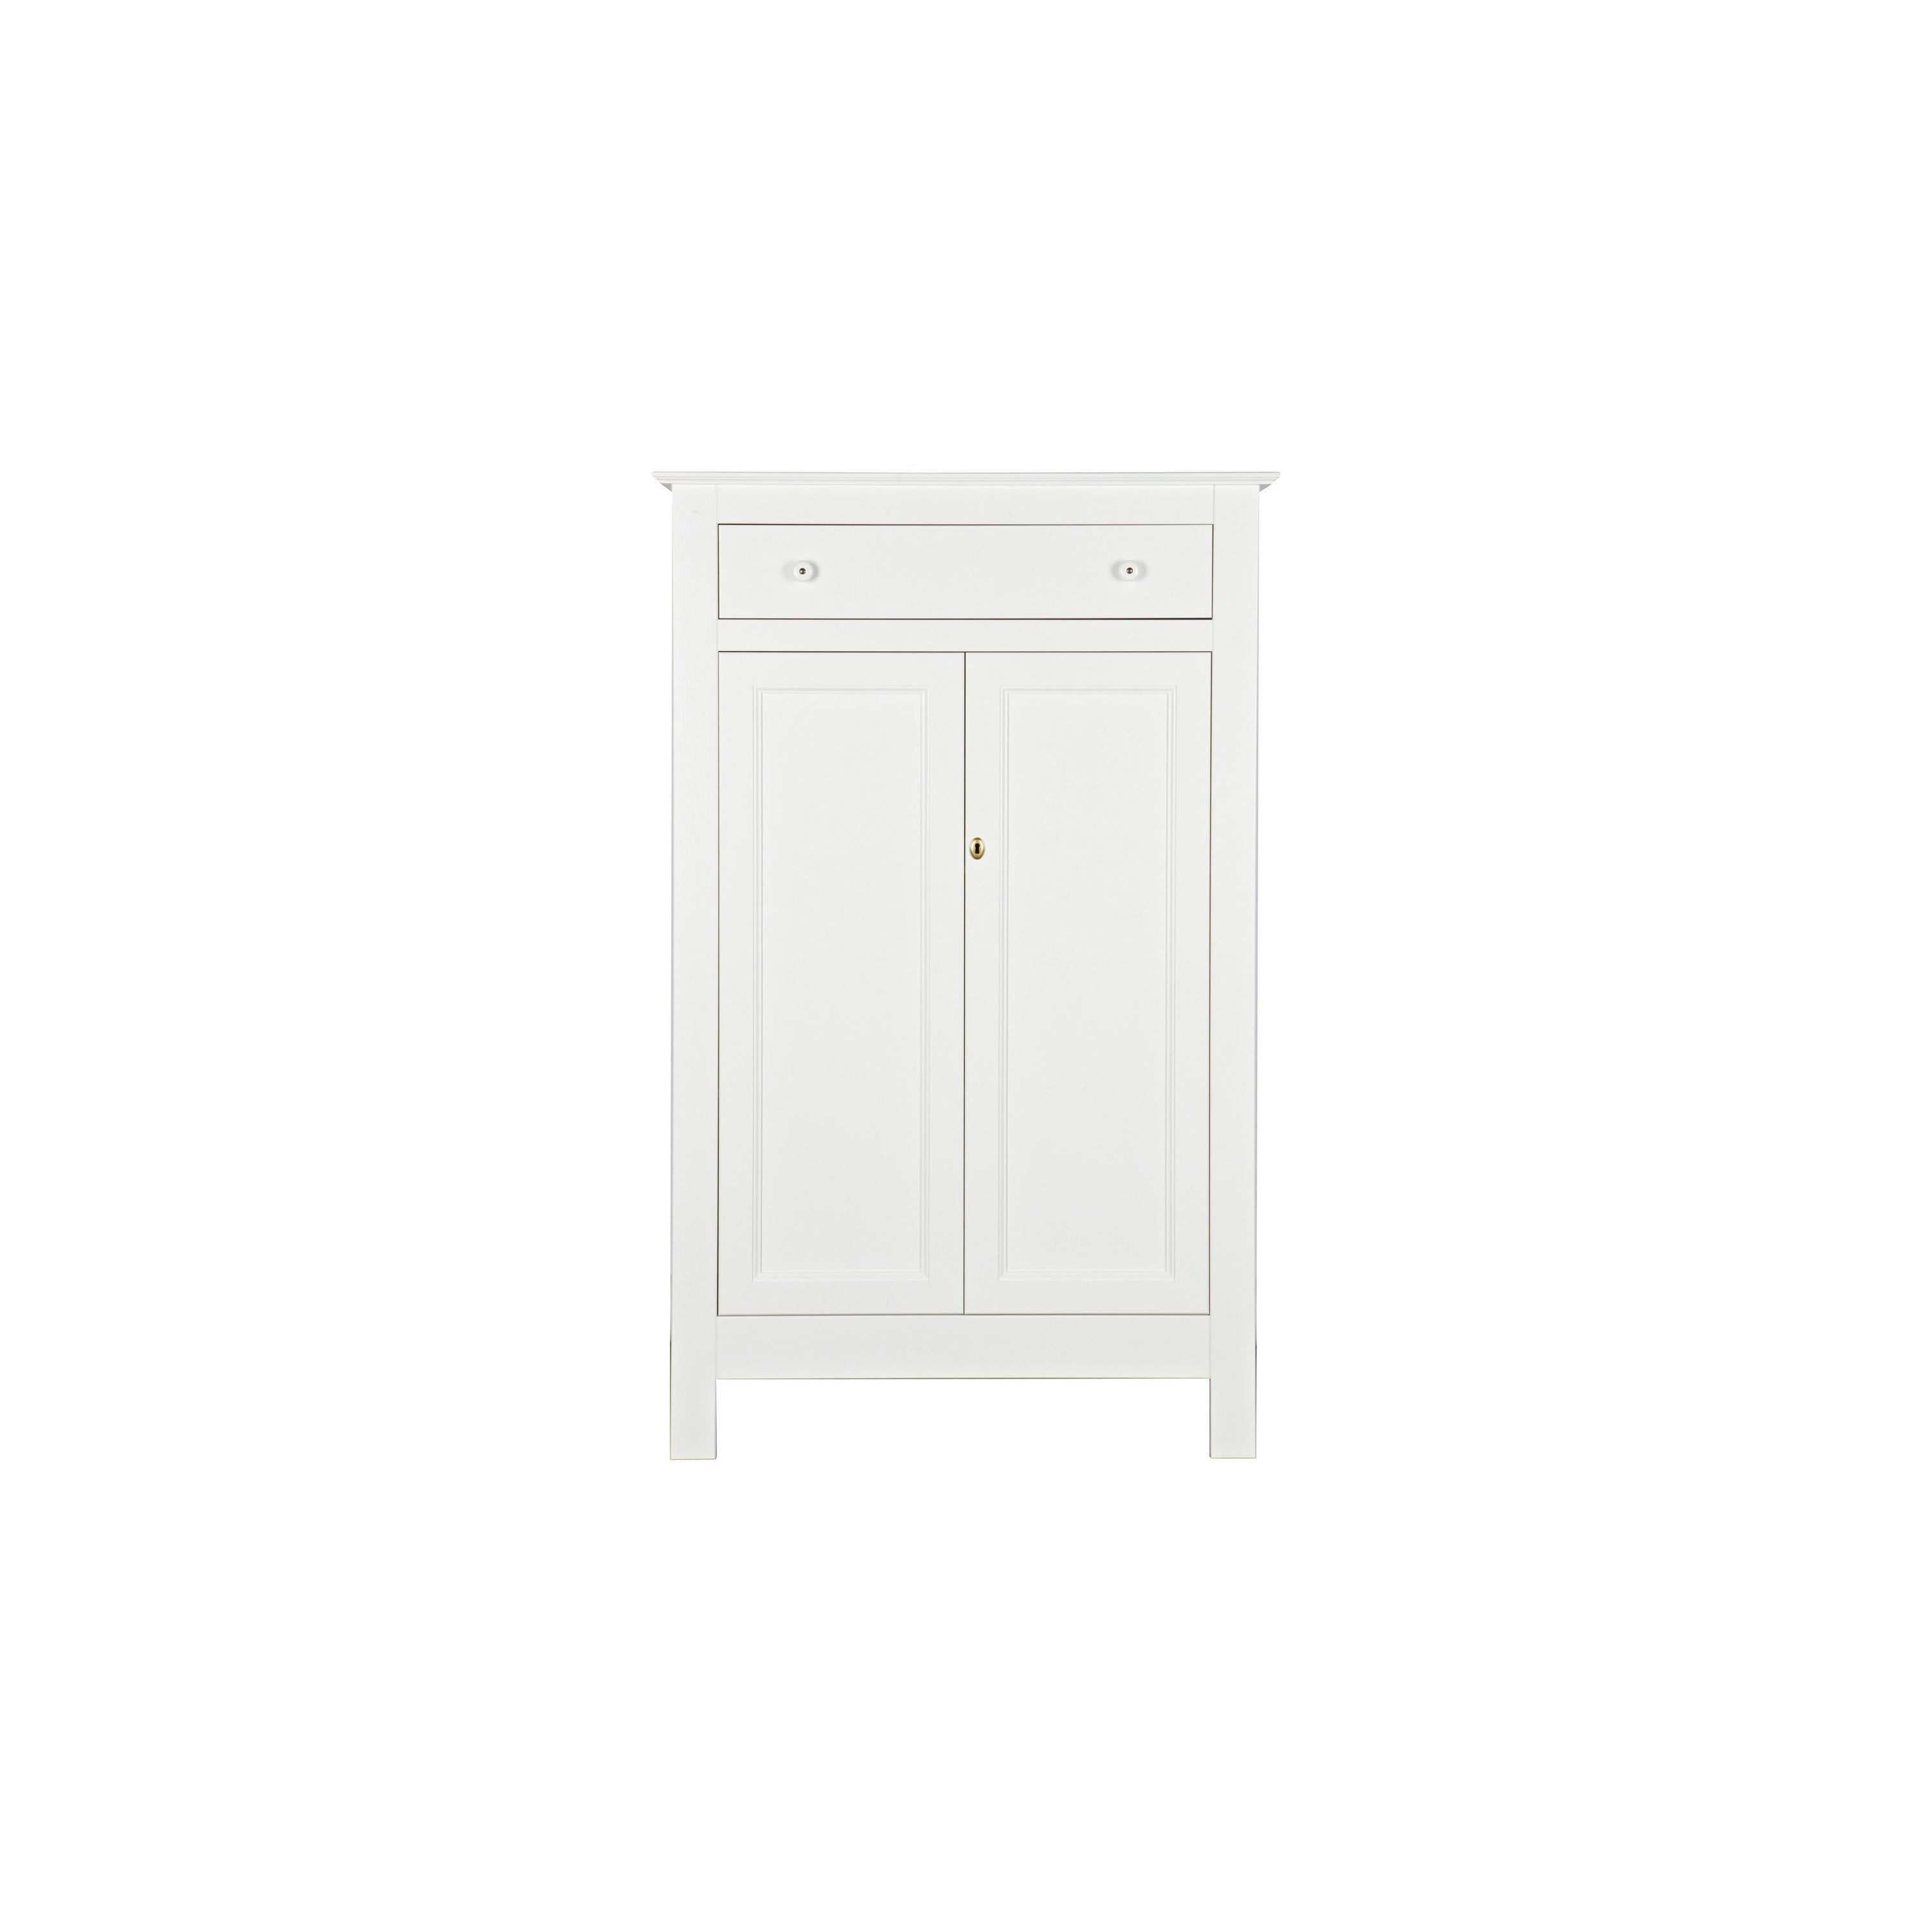 Spintelė "EVA", 150x93x40 cm, balta spalva, mediena (FSC)